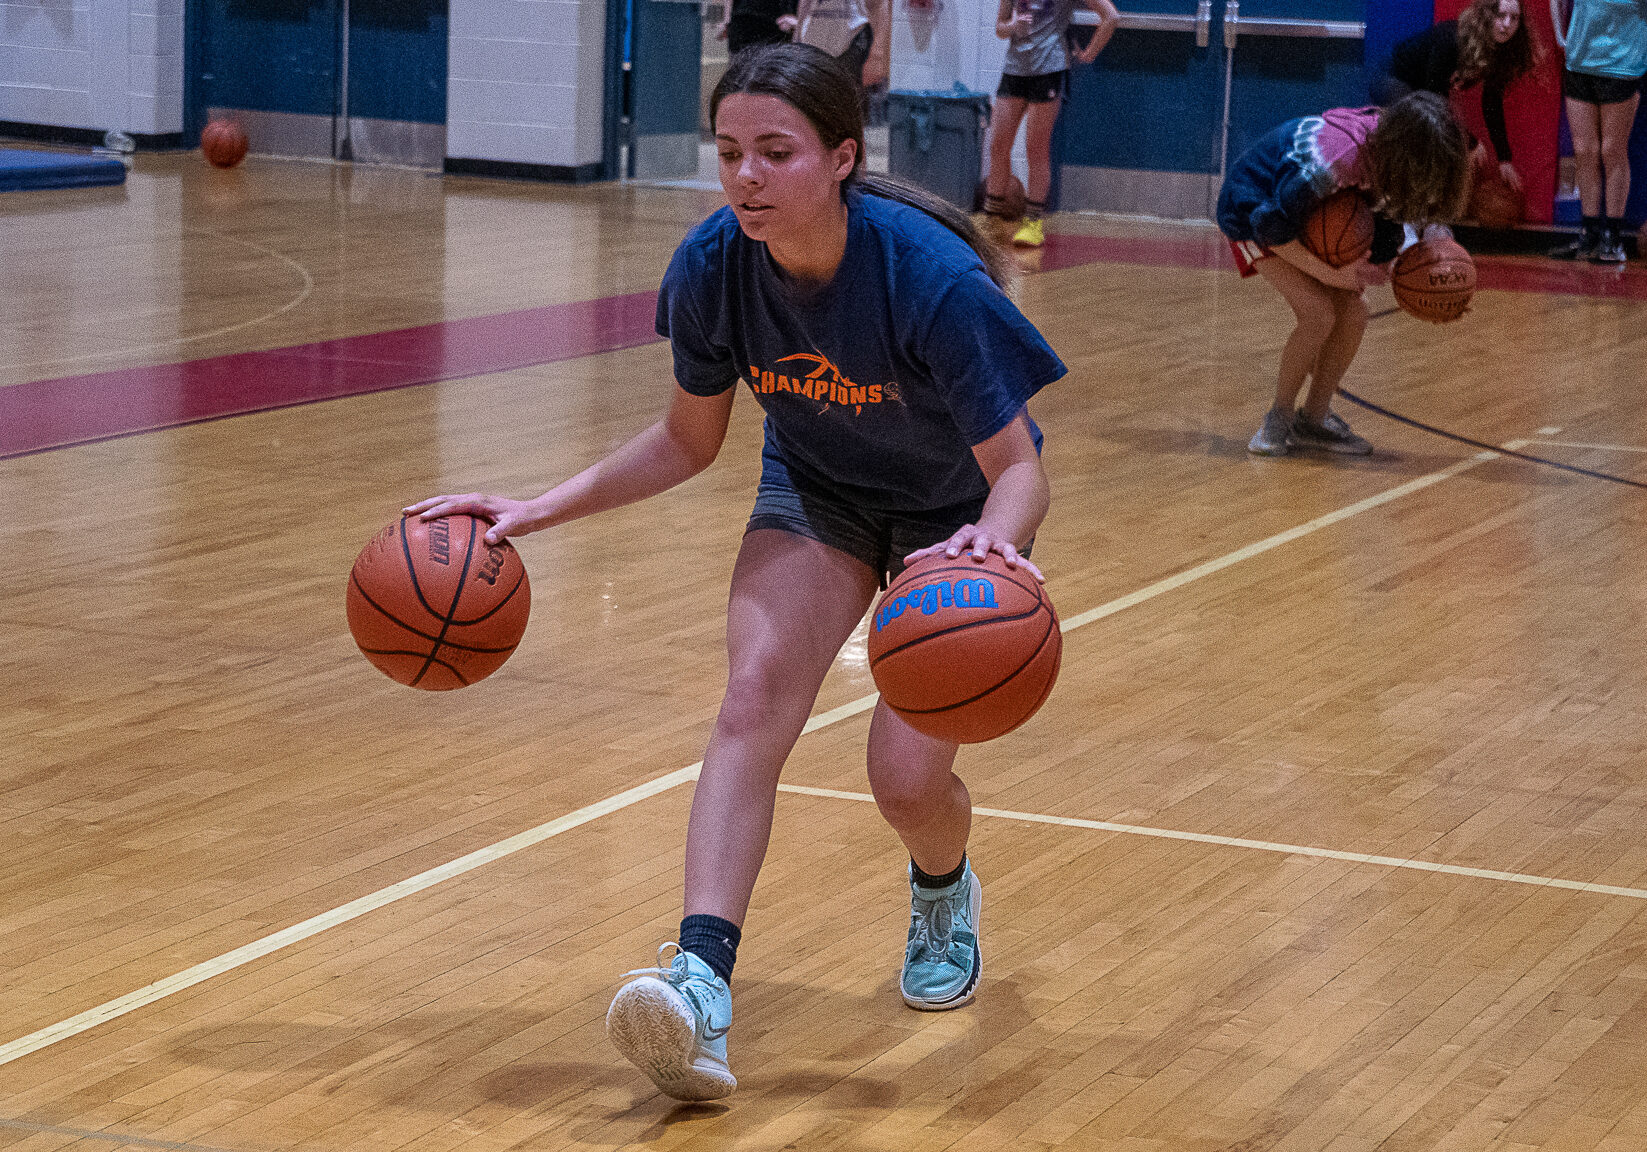 Girl dribbling two basketballs